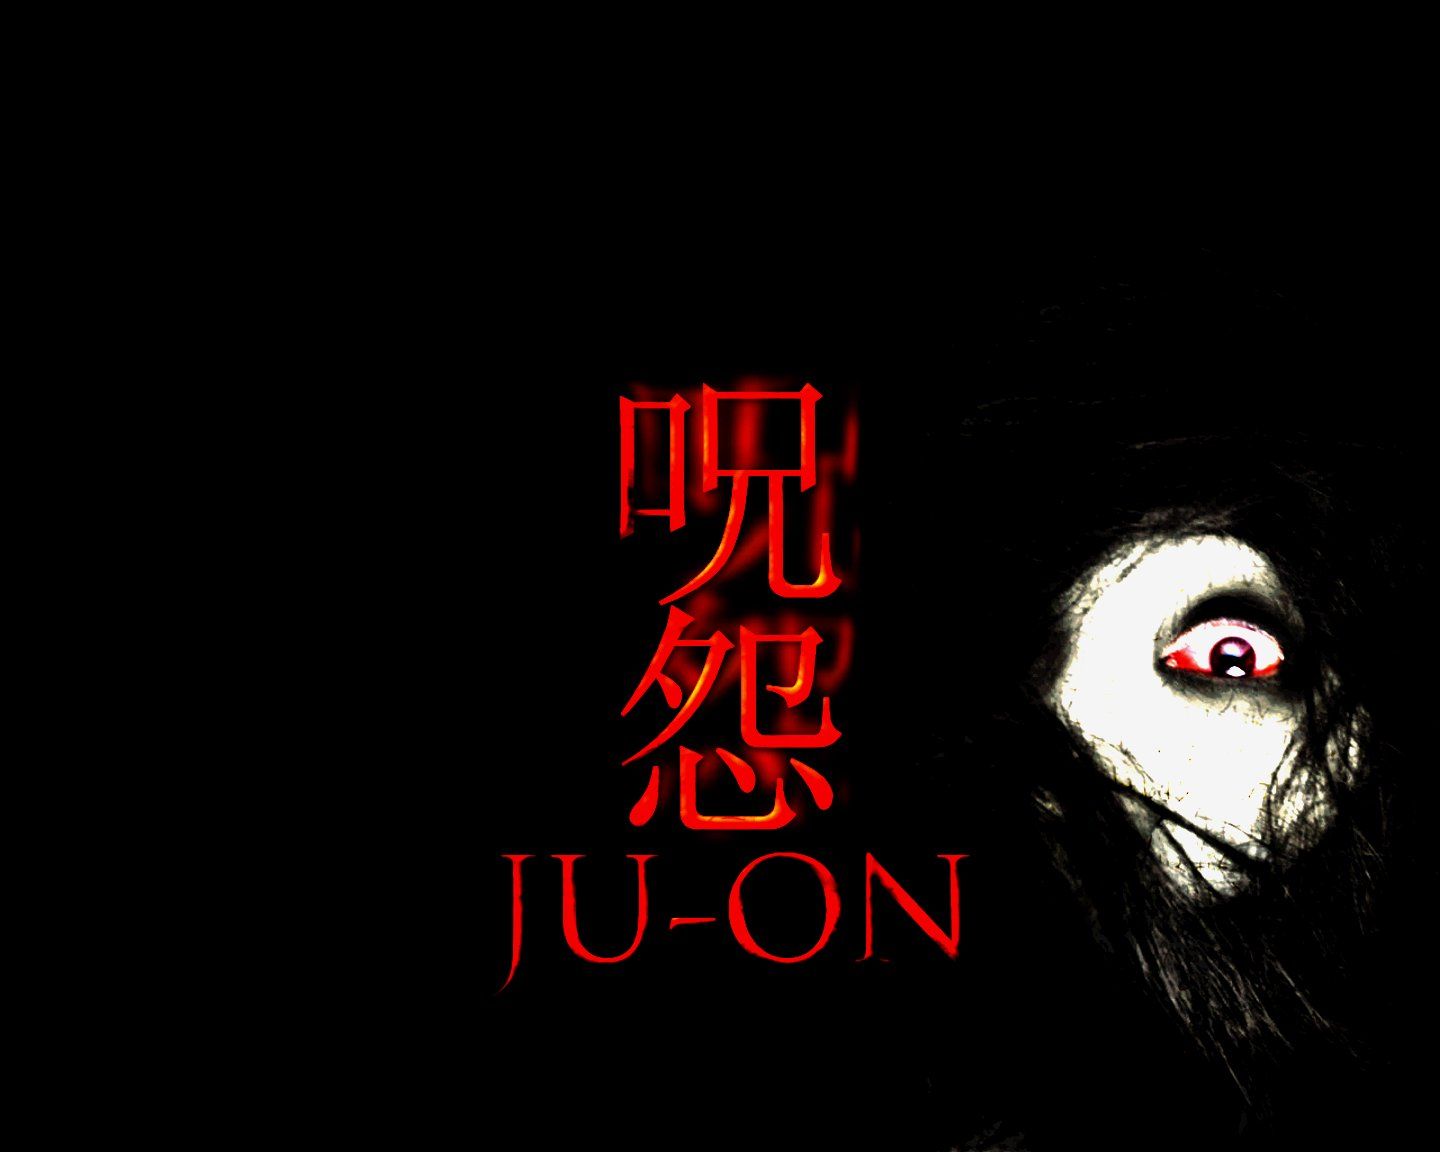 THE GRUDGE horror mystery thriller dark movie film the grudge ju